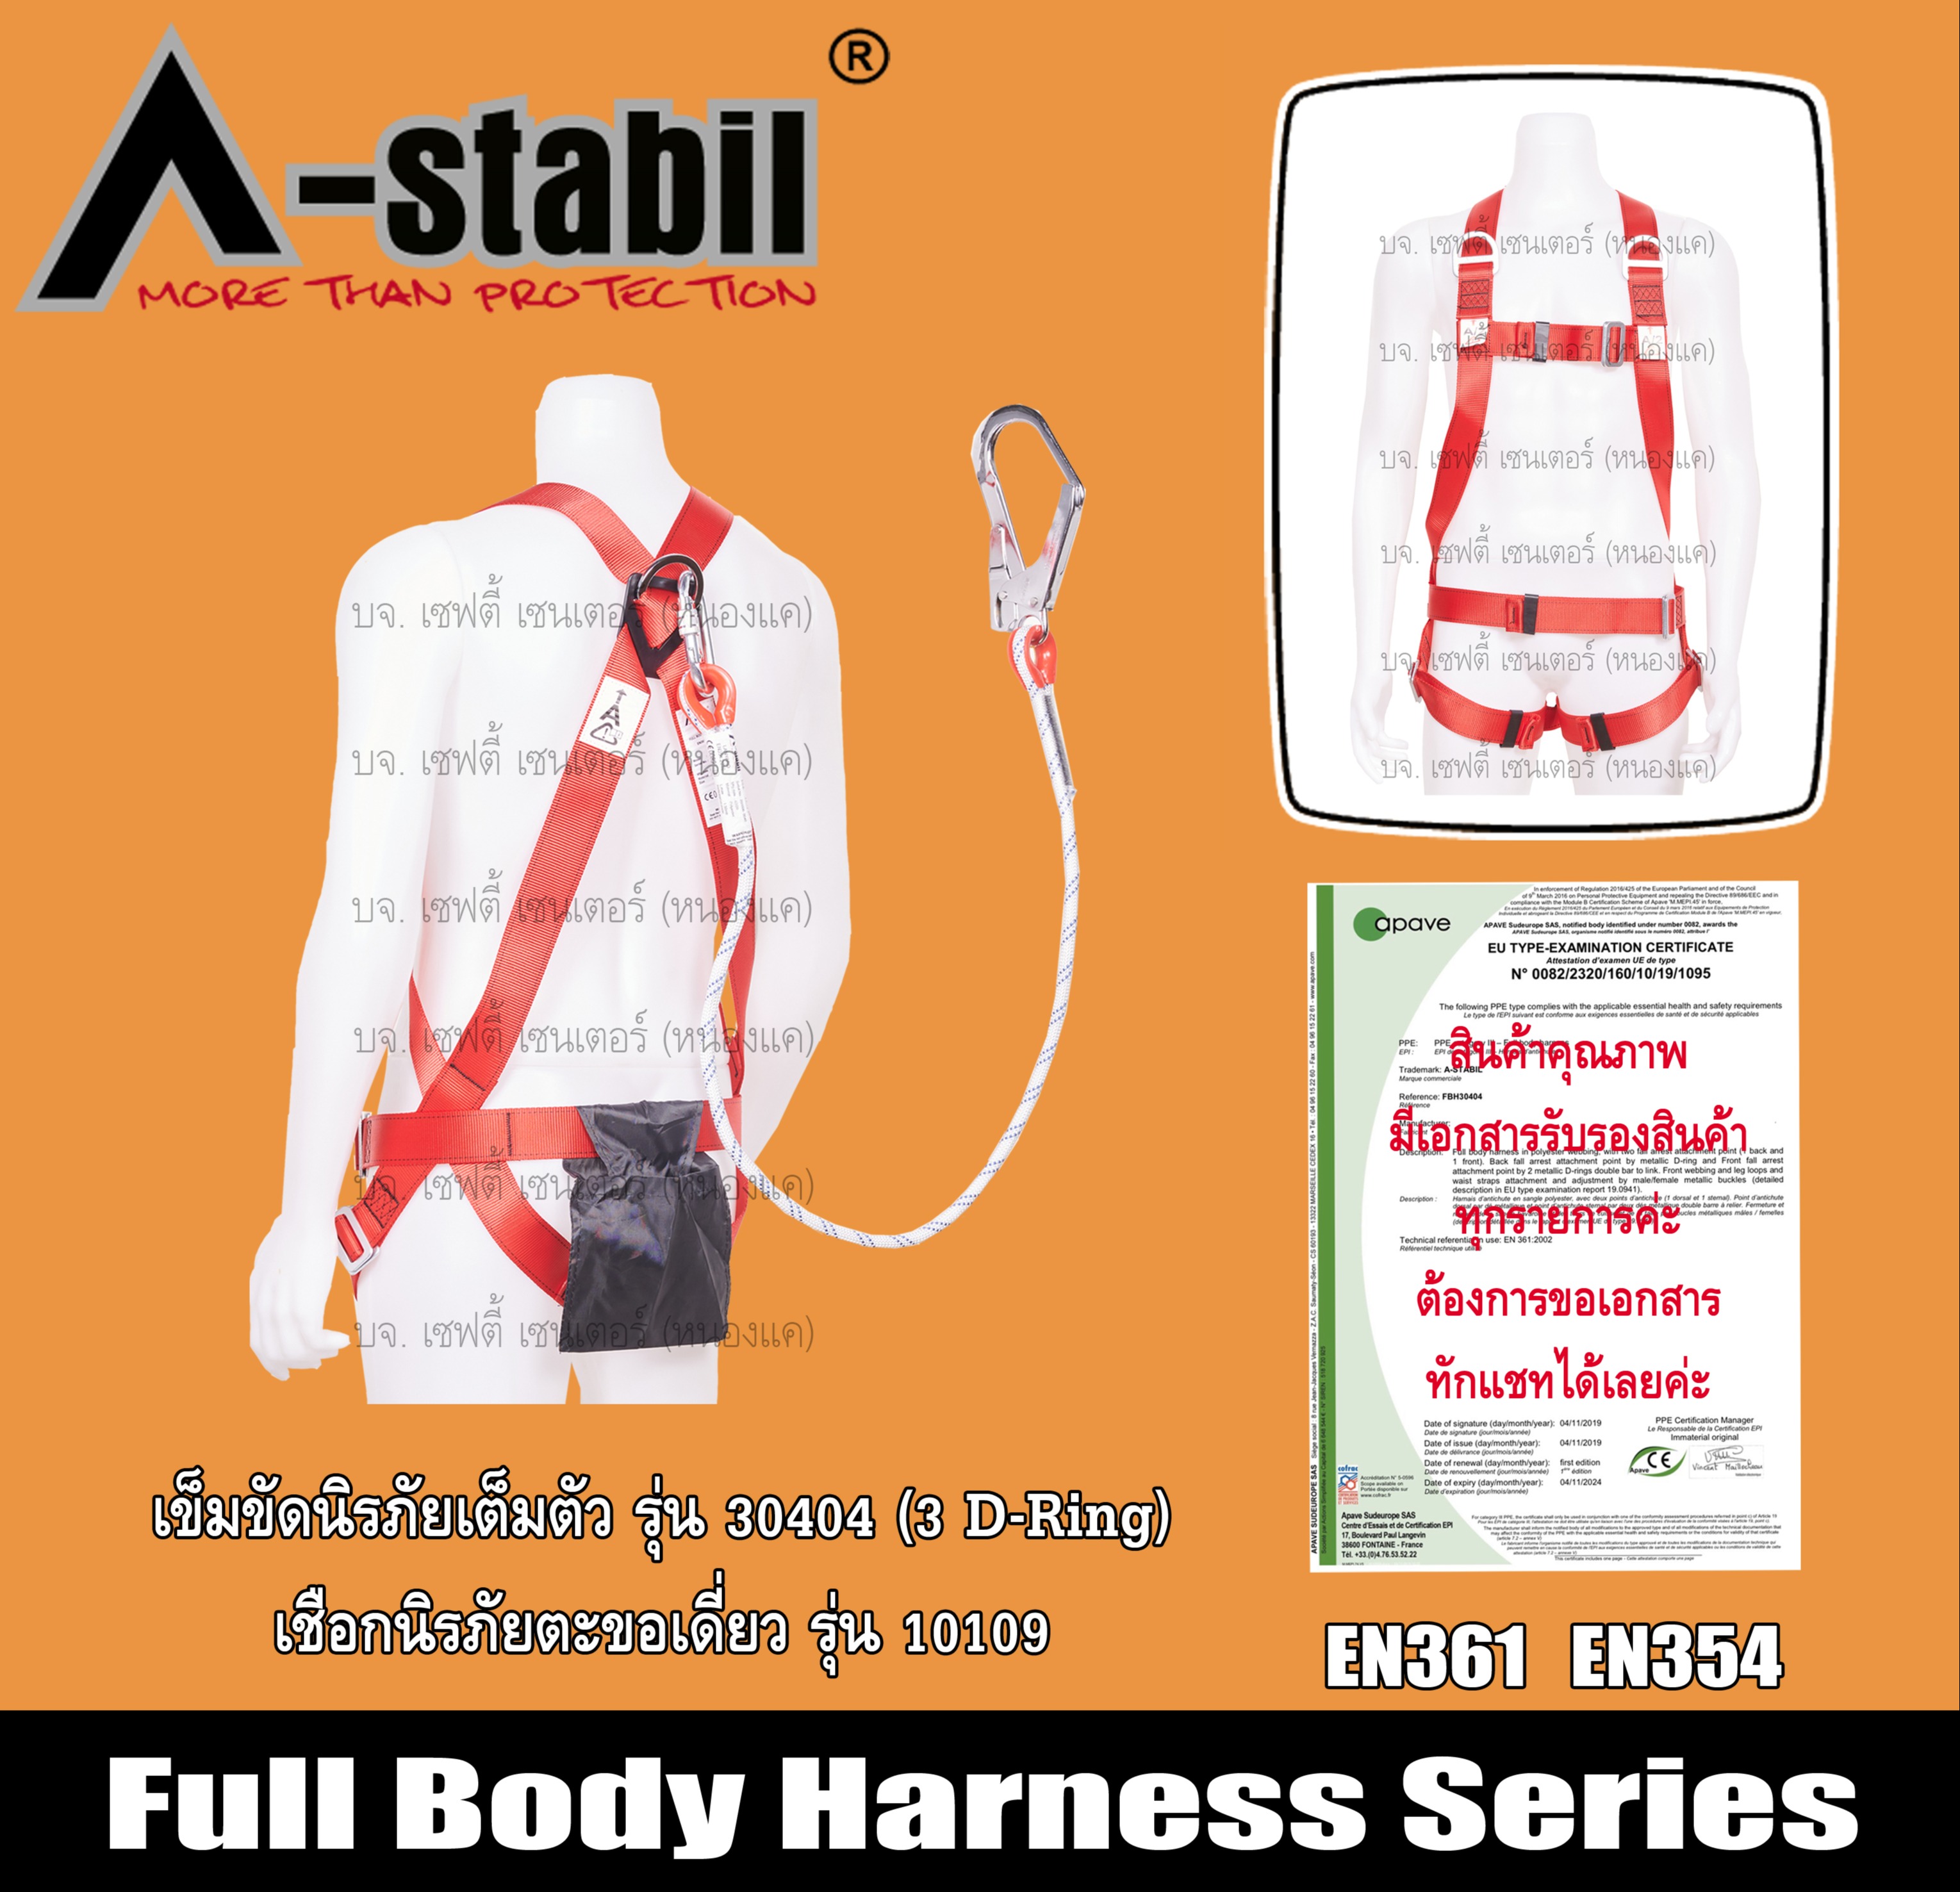 A-Stabil Full Body Harness เข็มขัดกันตก แบบเต็มตัว สีแดง พร้อมสายช่วยตะขอใหญ่เดี่ยว